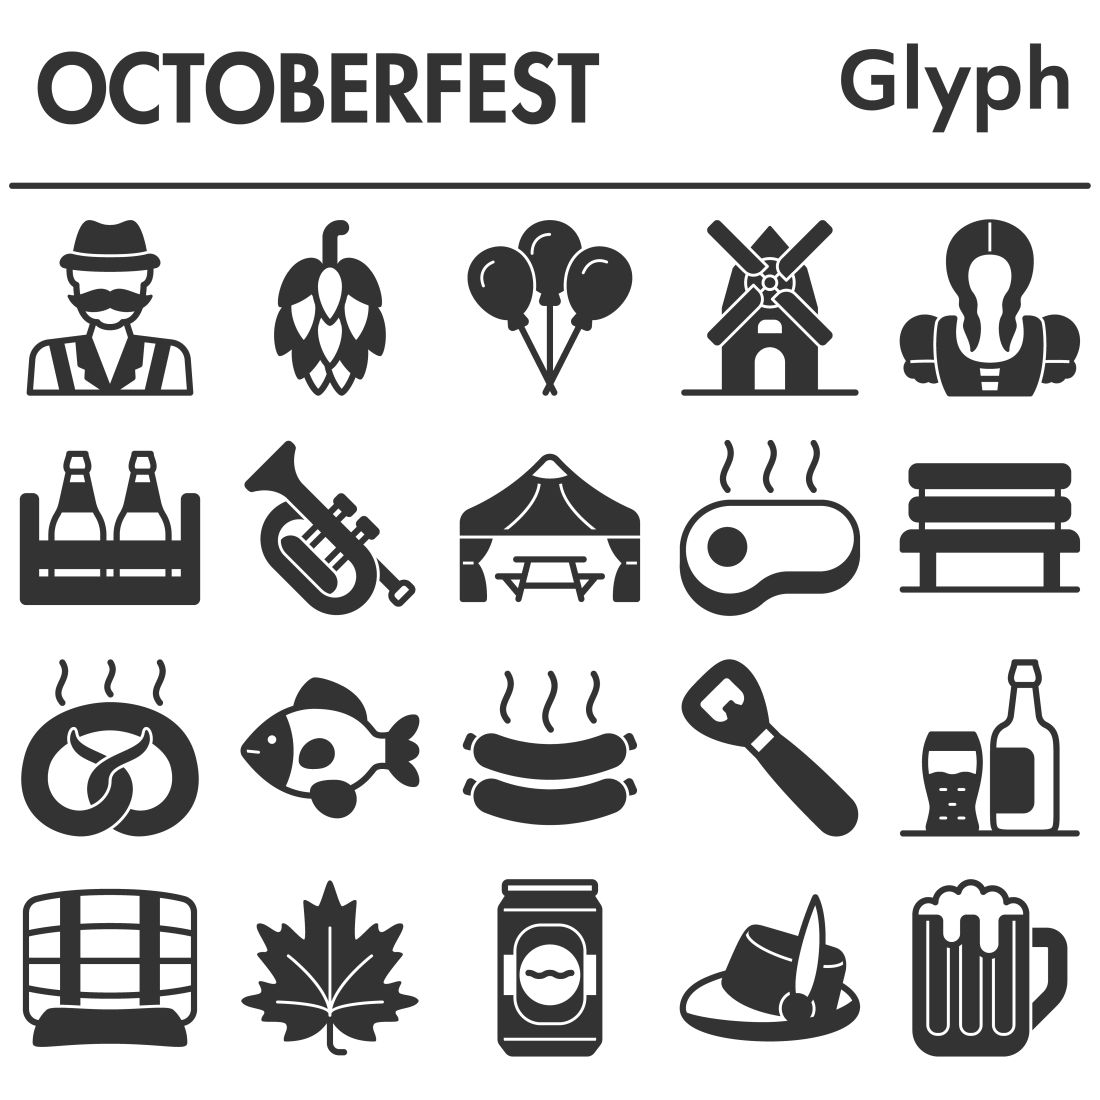 Oktoberfest icons set, glyph style cover image.